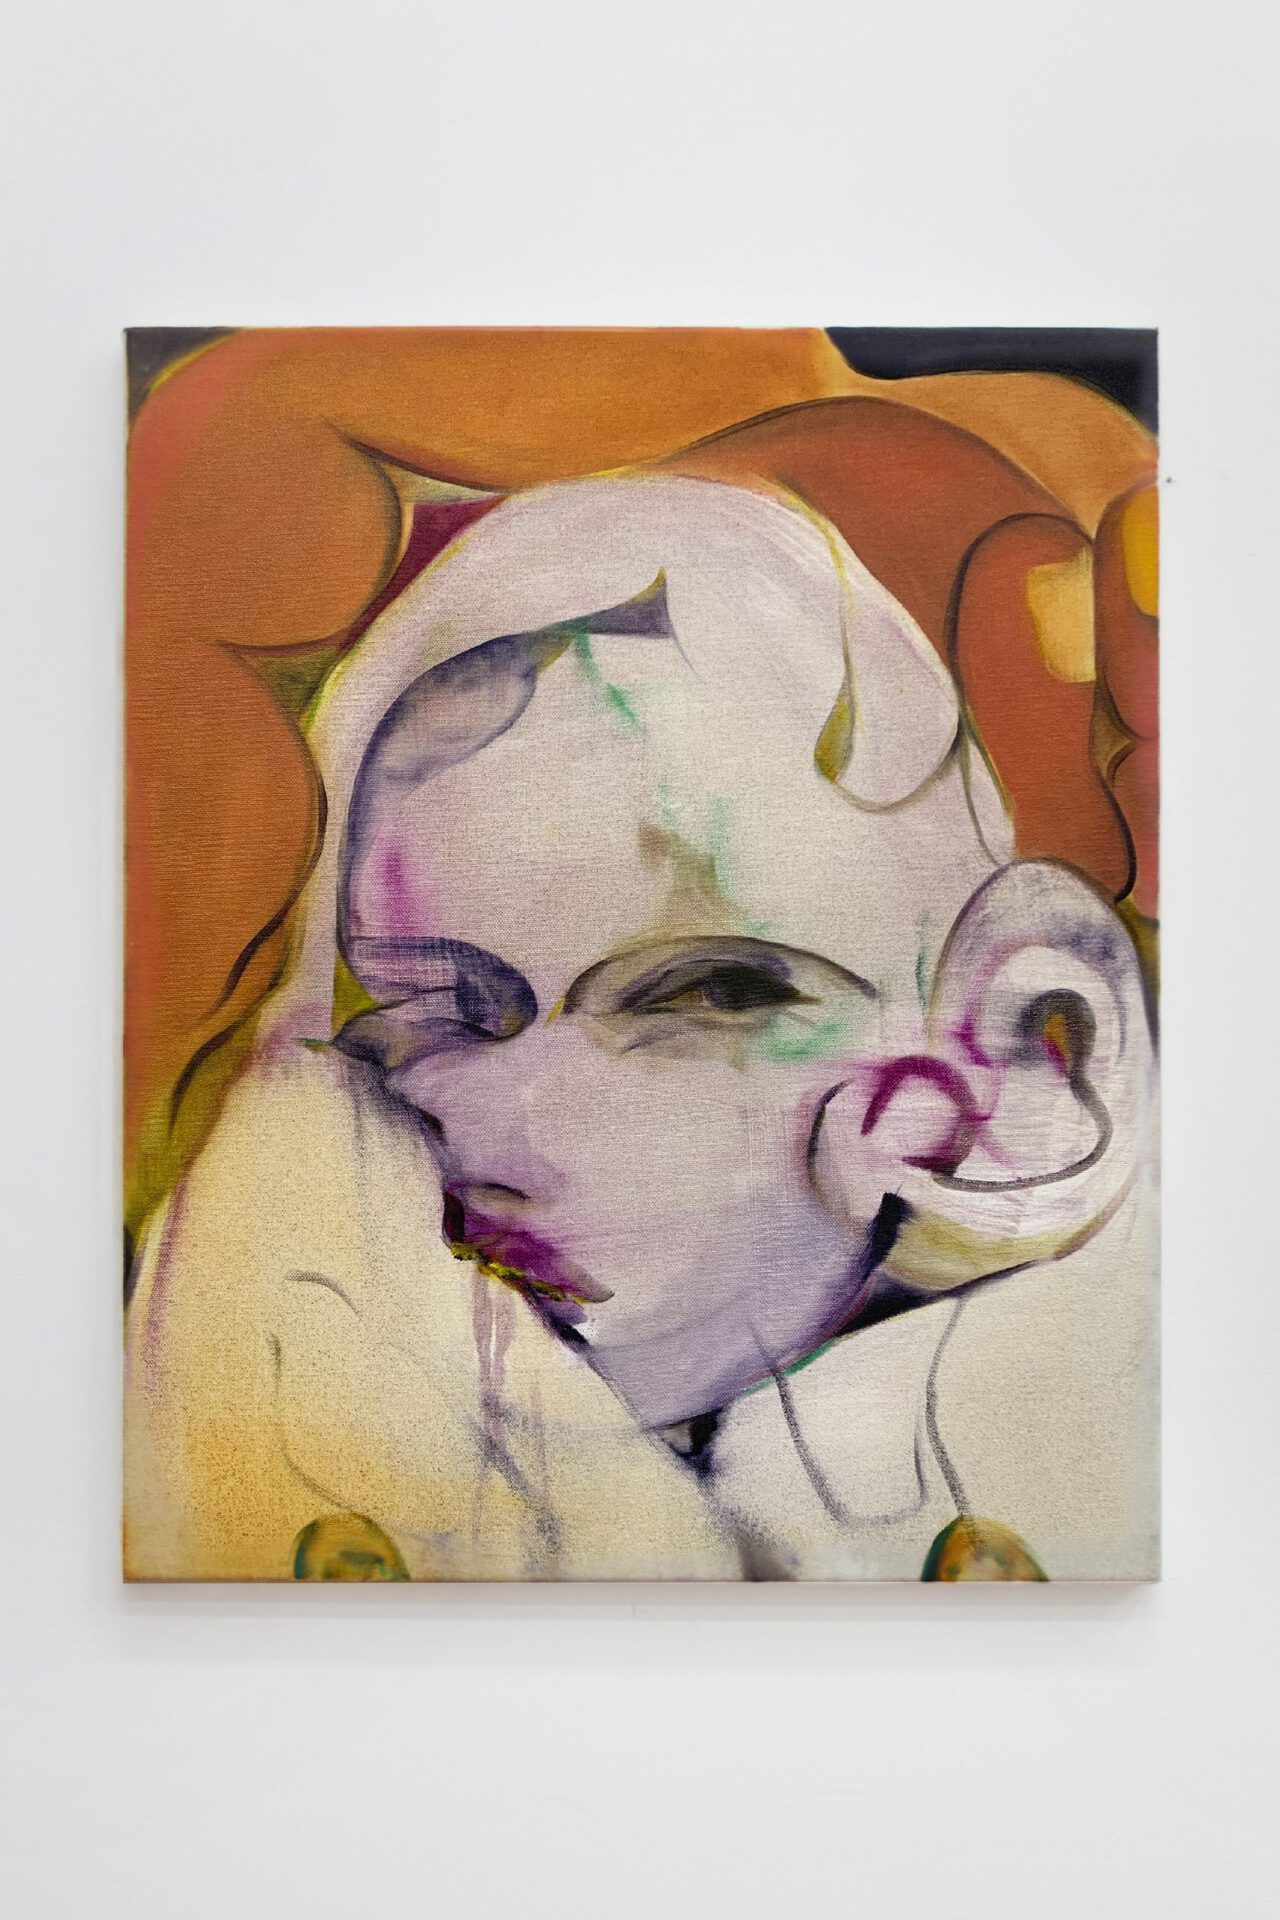 Julia Trybala, Spit, 2020, Oil on canvas, 41 x 51cm.